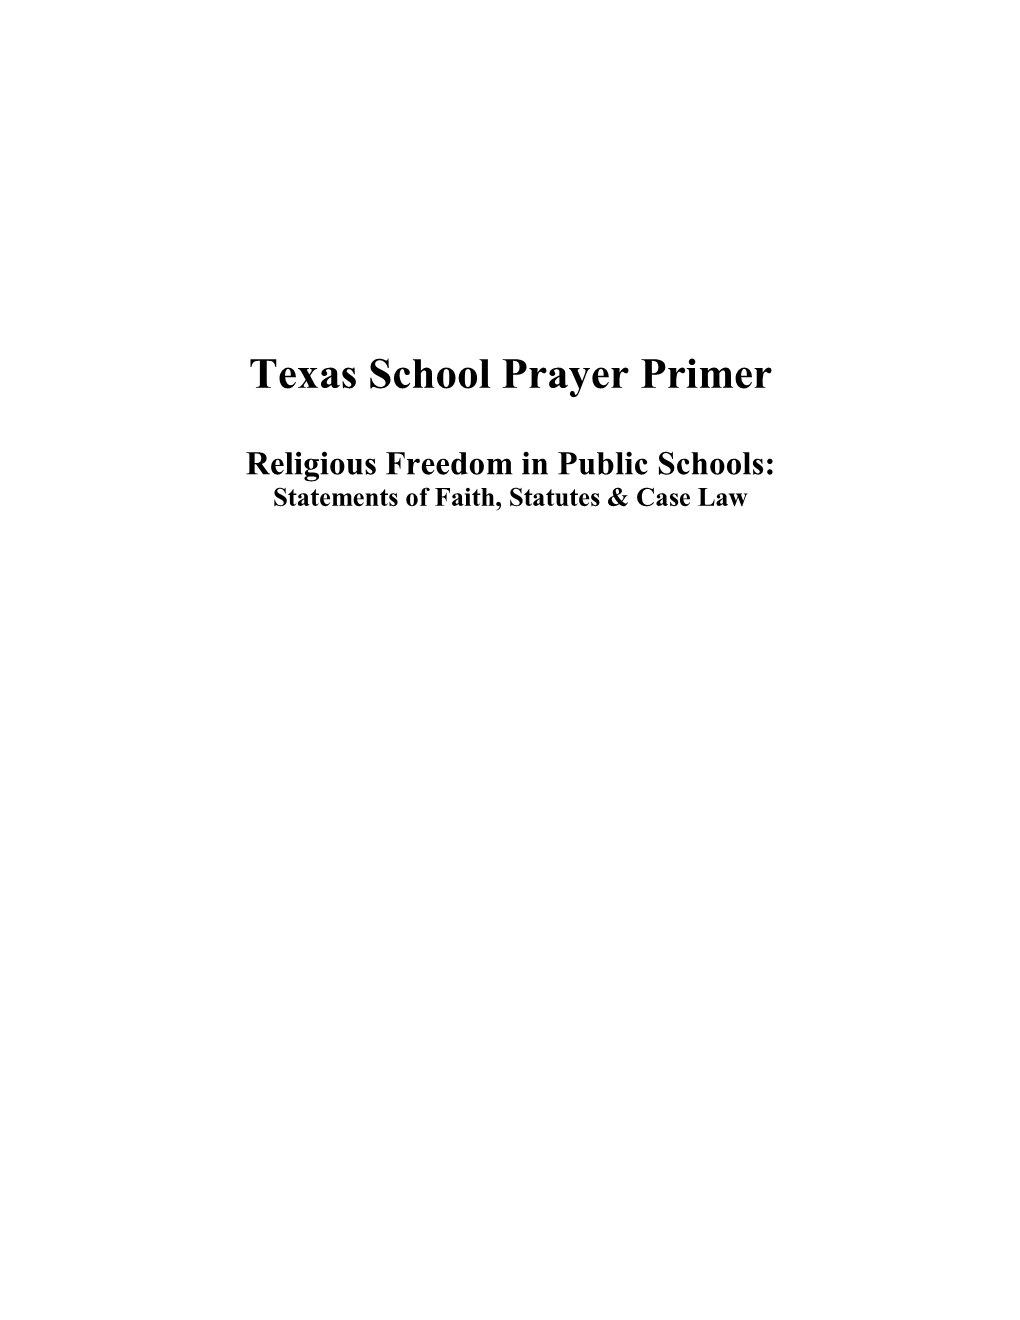 Prayer in Public Schools